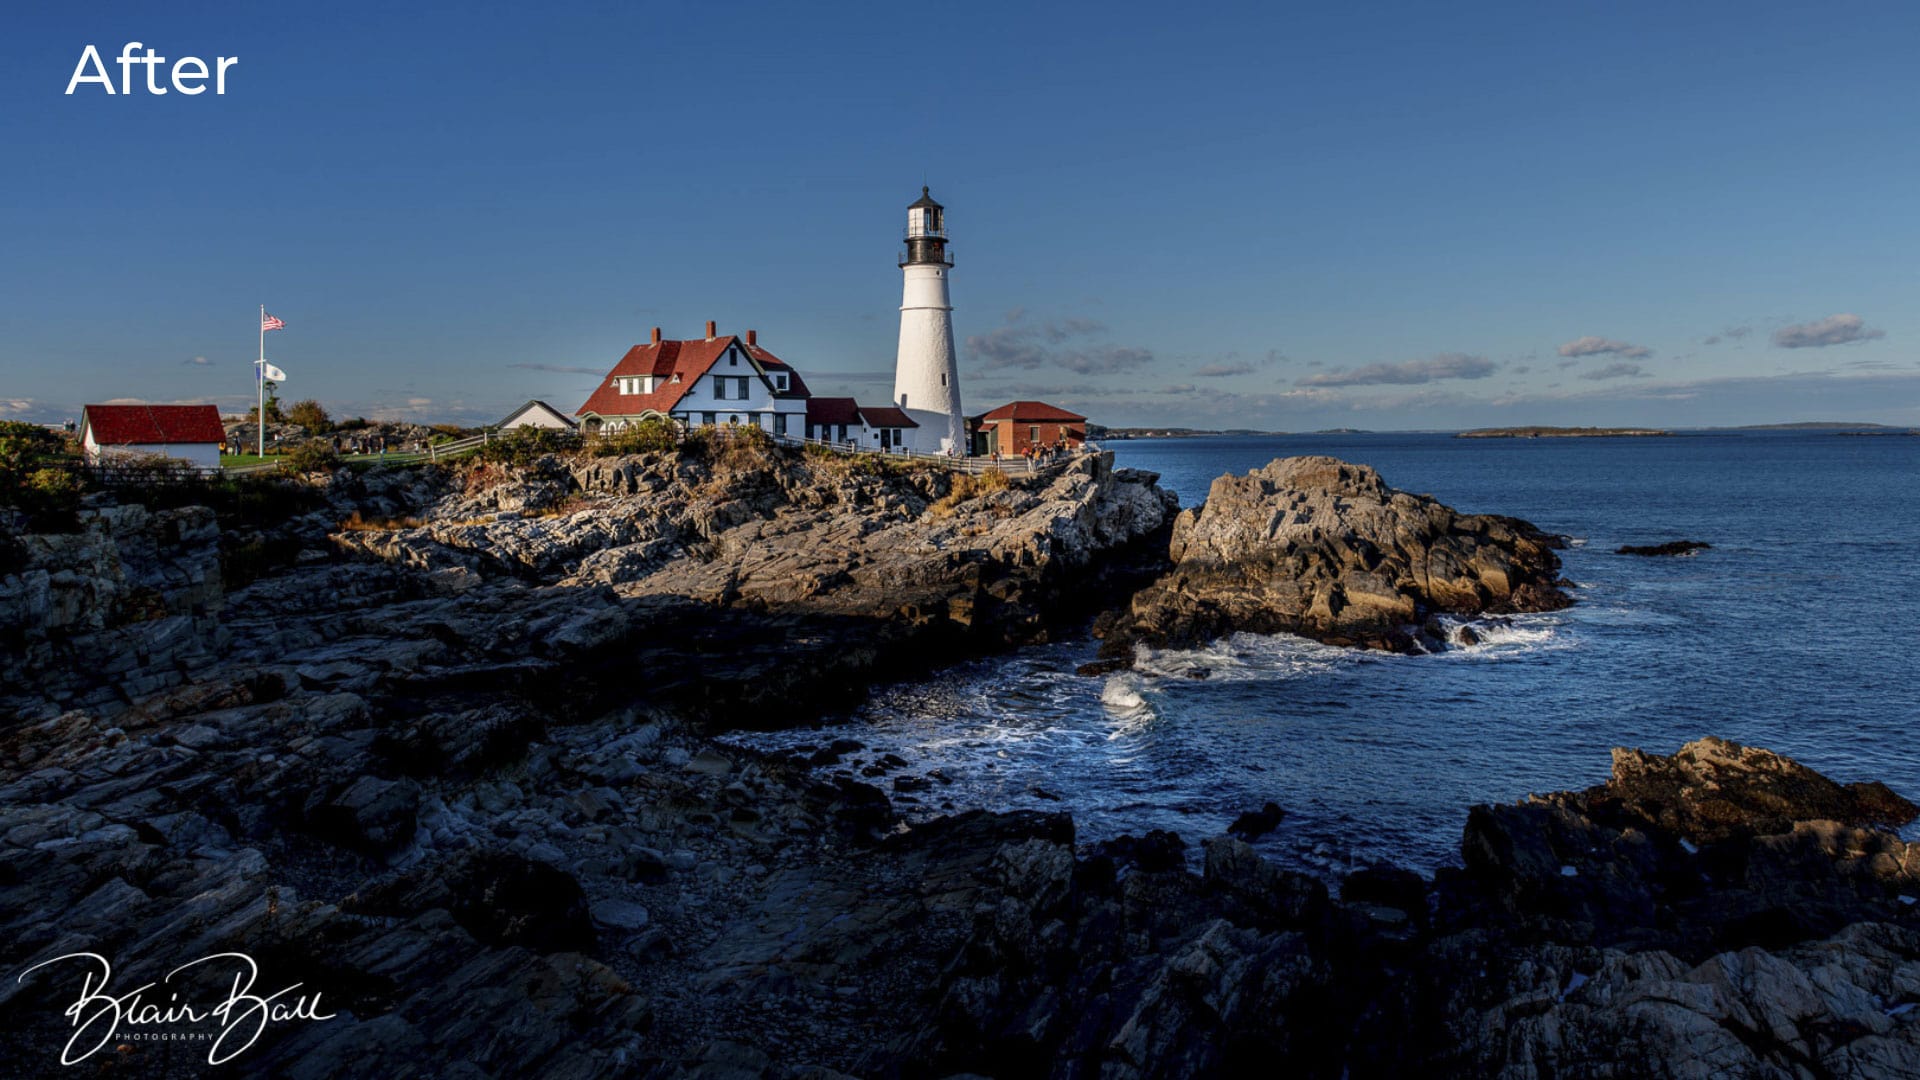 Portland Head Lighthouse - Cape Elizabeth Maine - After ©Blair Ball Photography Image